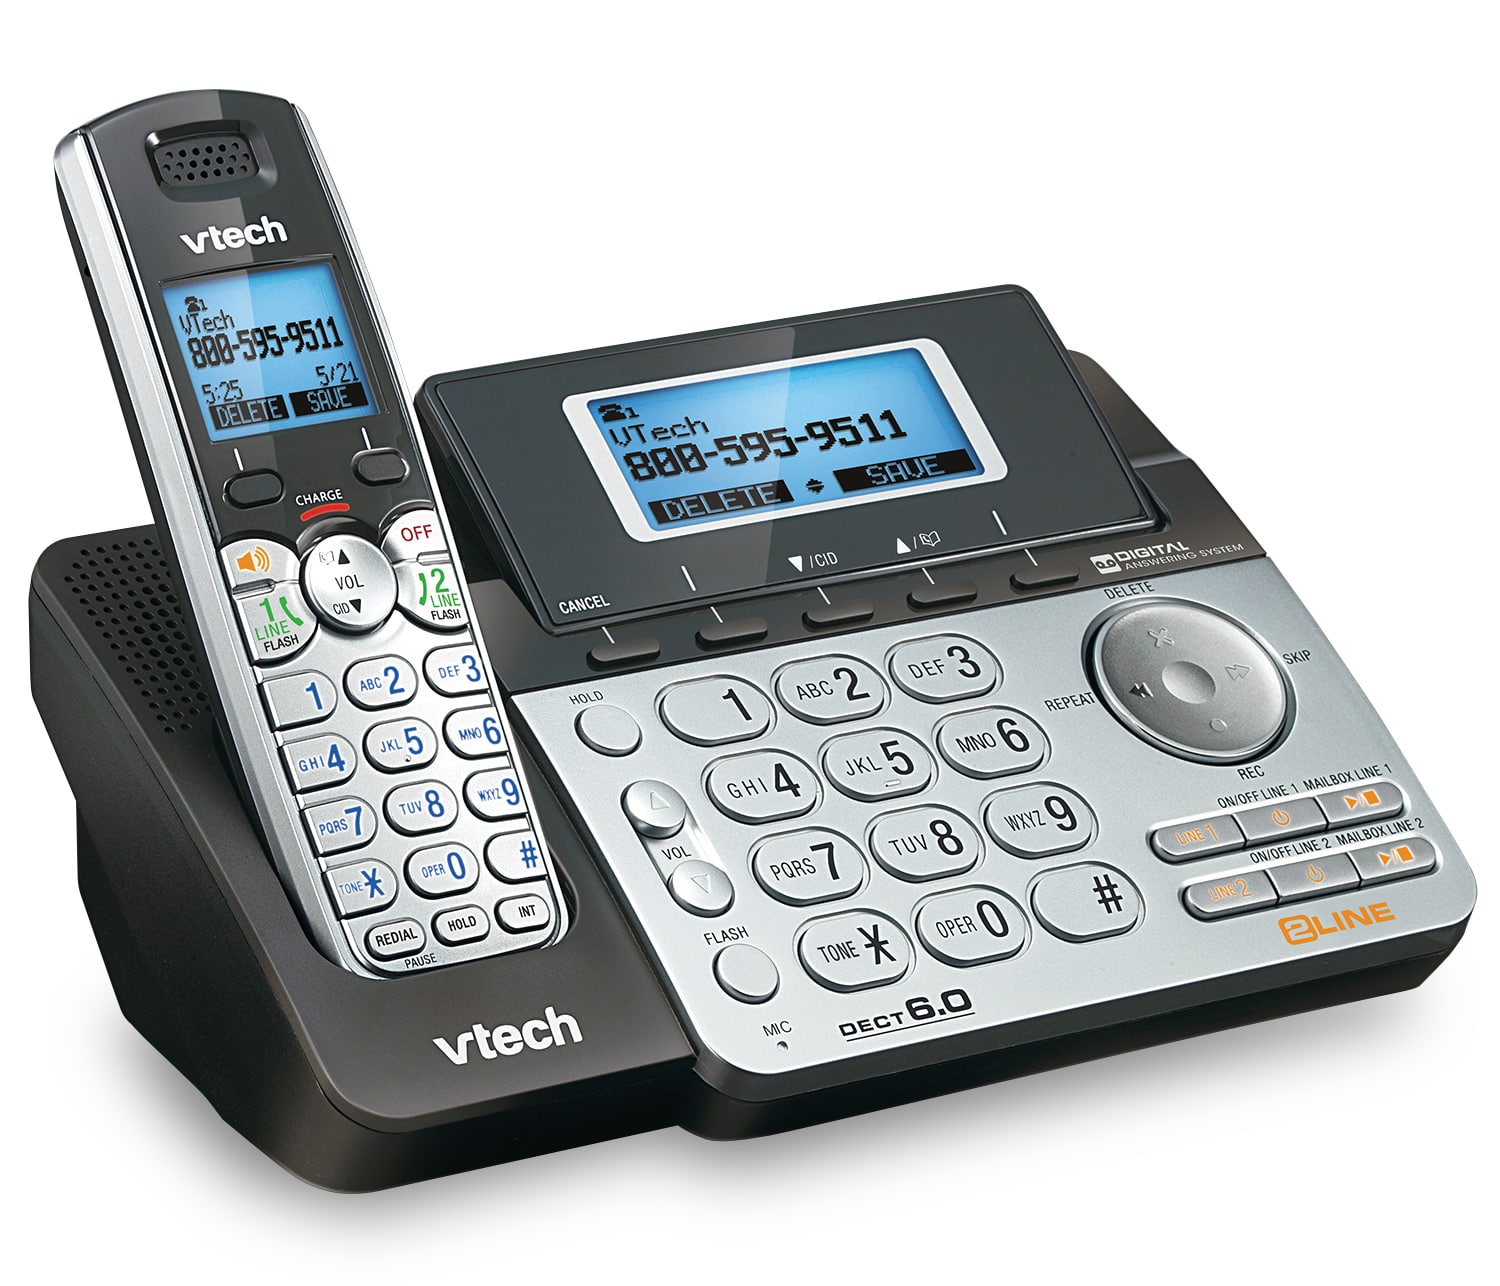 VTech Cordless Phones Official Site | Best Home Office & Business Phones